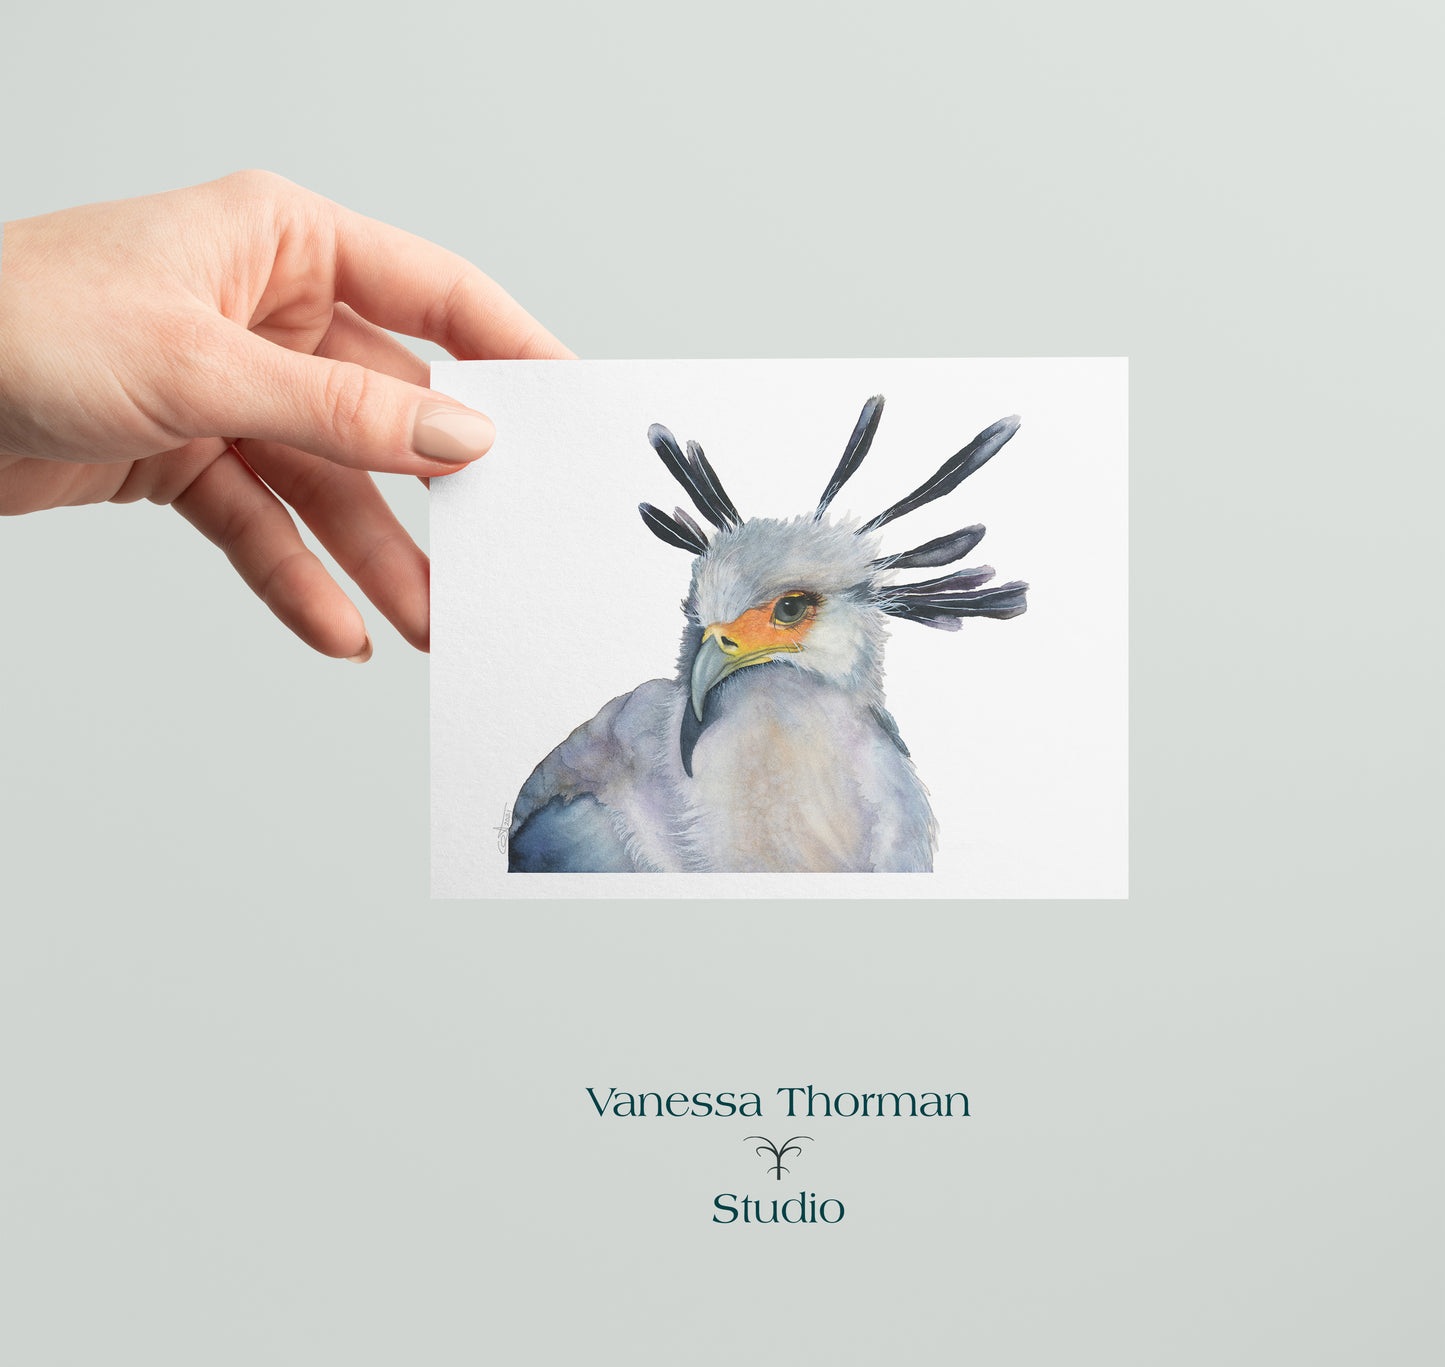 Secretarybird - Bird Note Cards